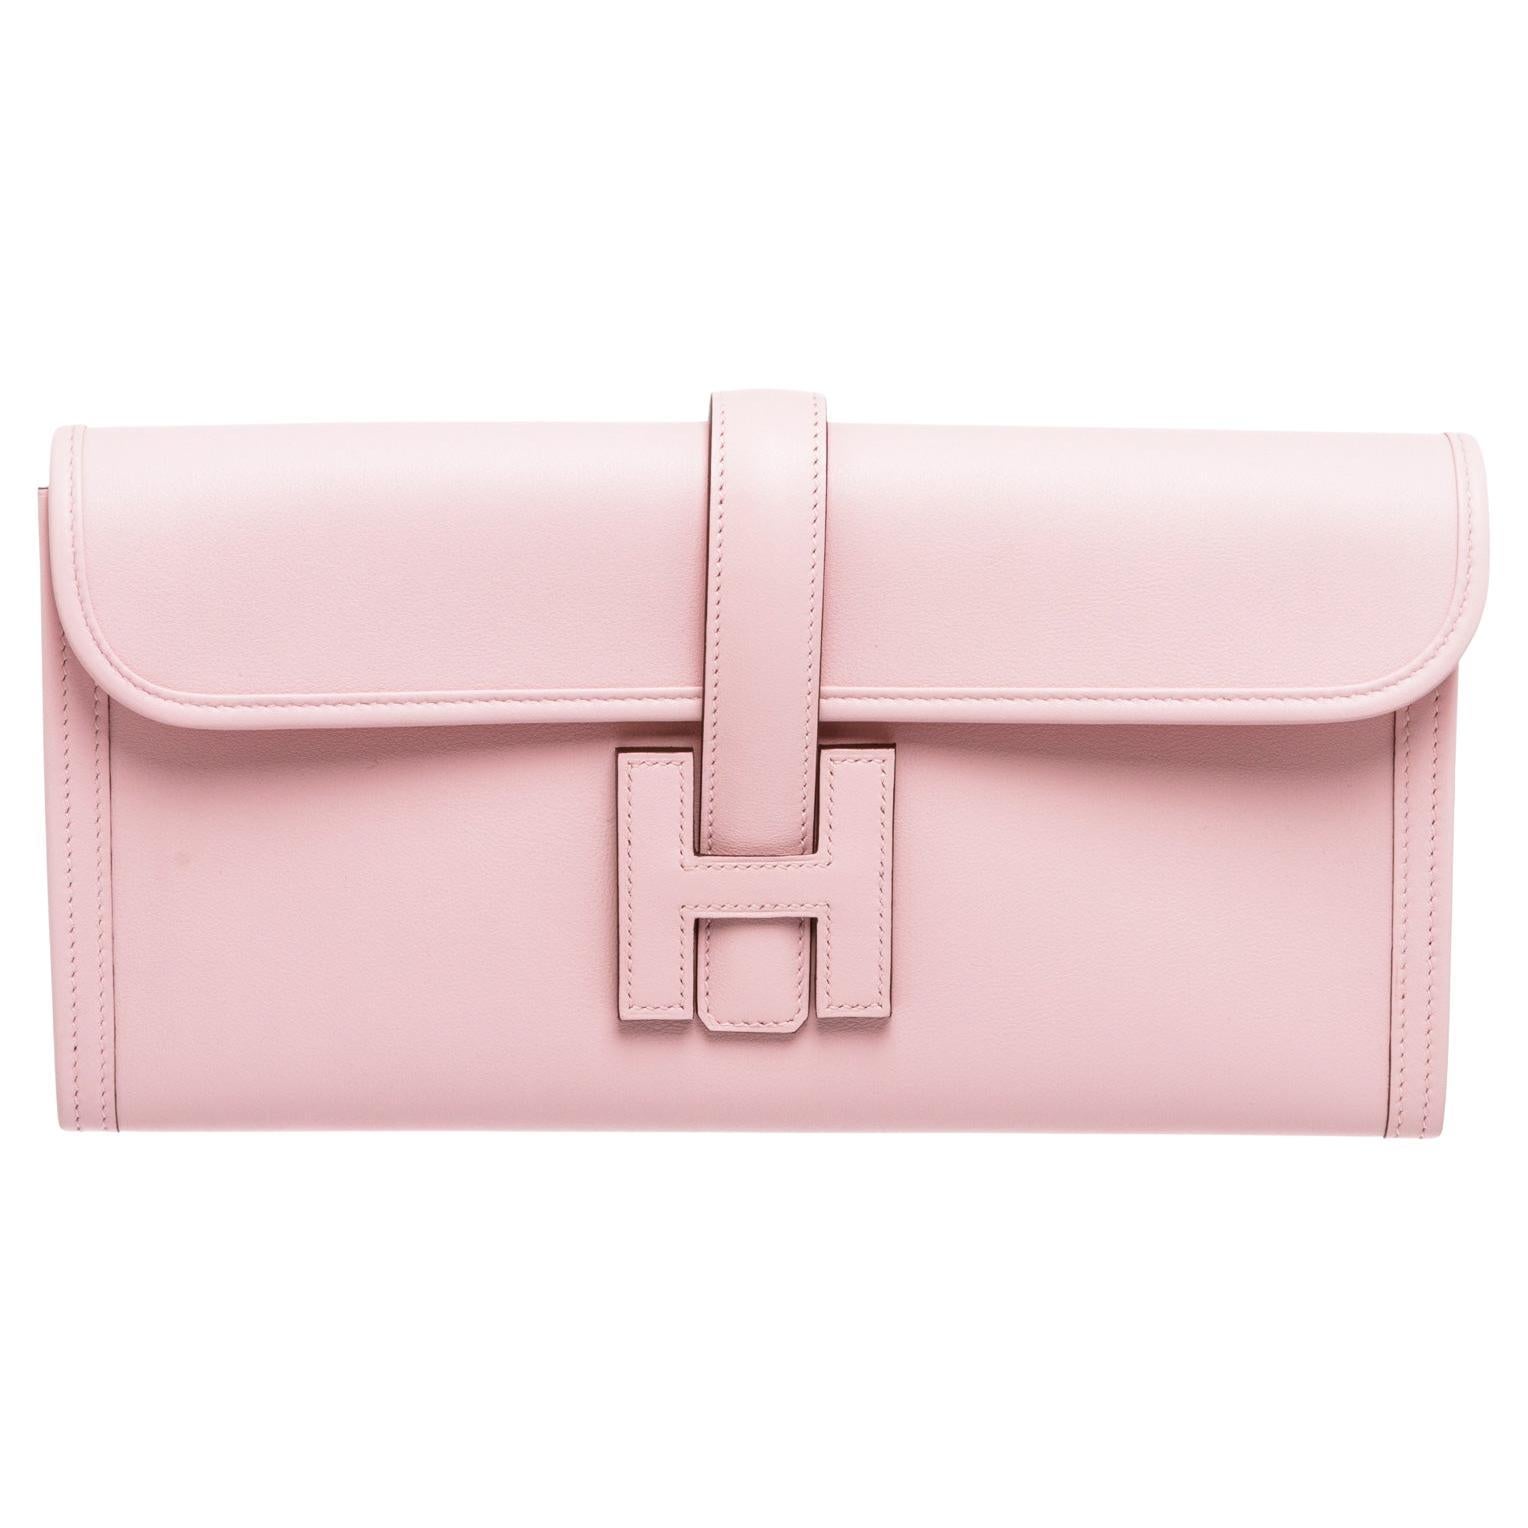 Hermes Rose Sakura Pink Swift Leather Jige 29cm Clutch